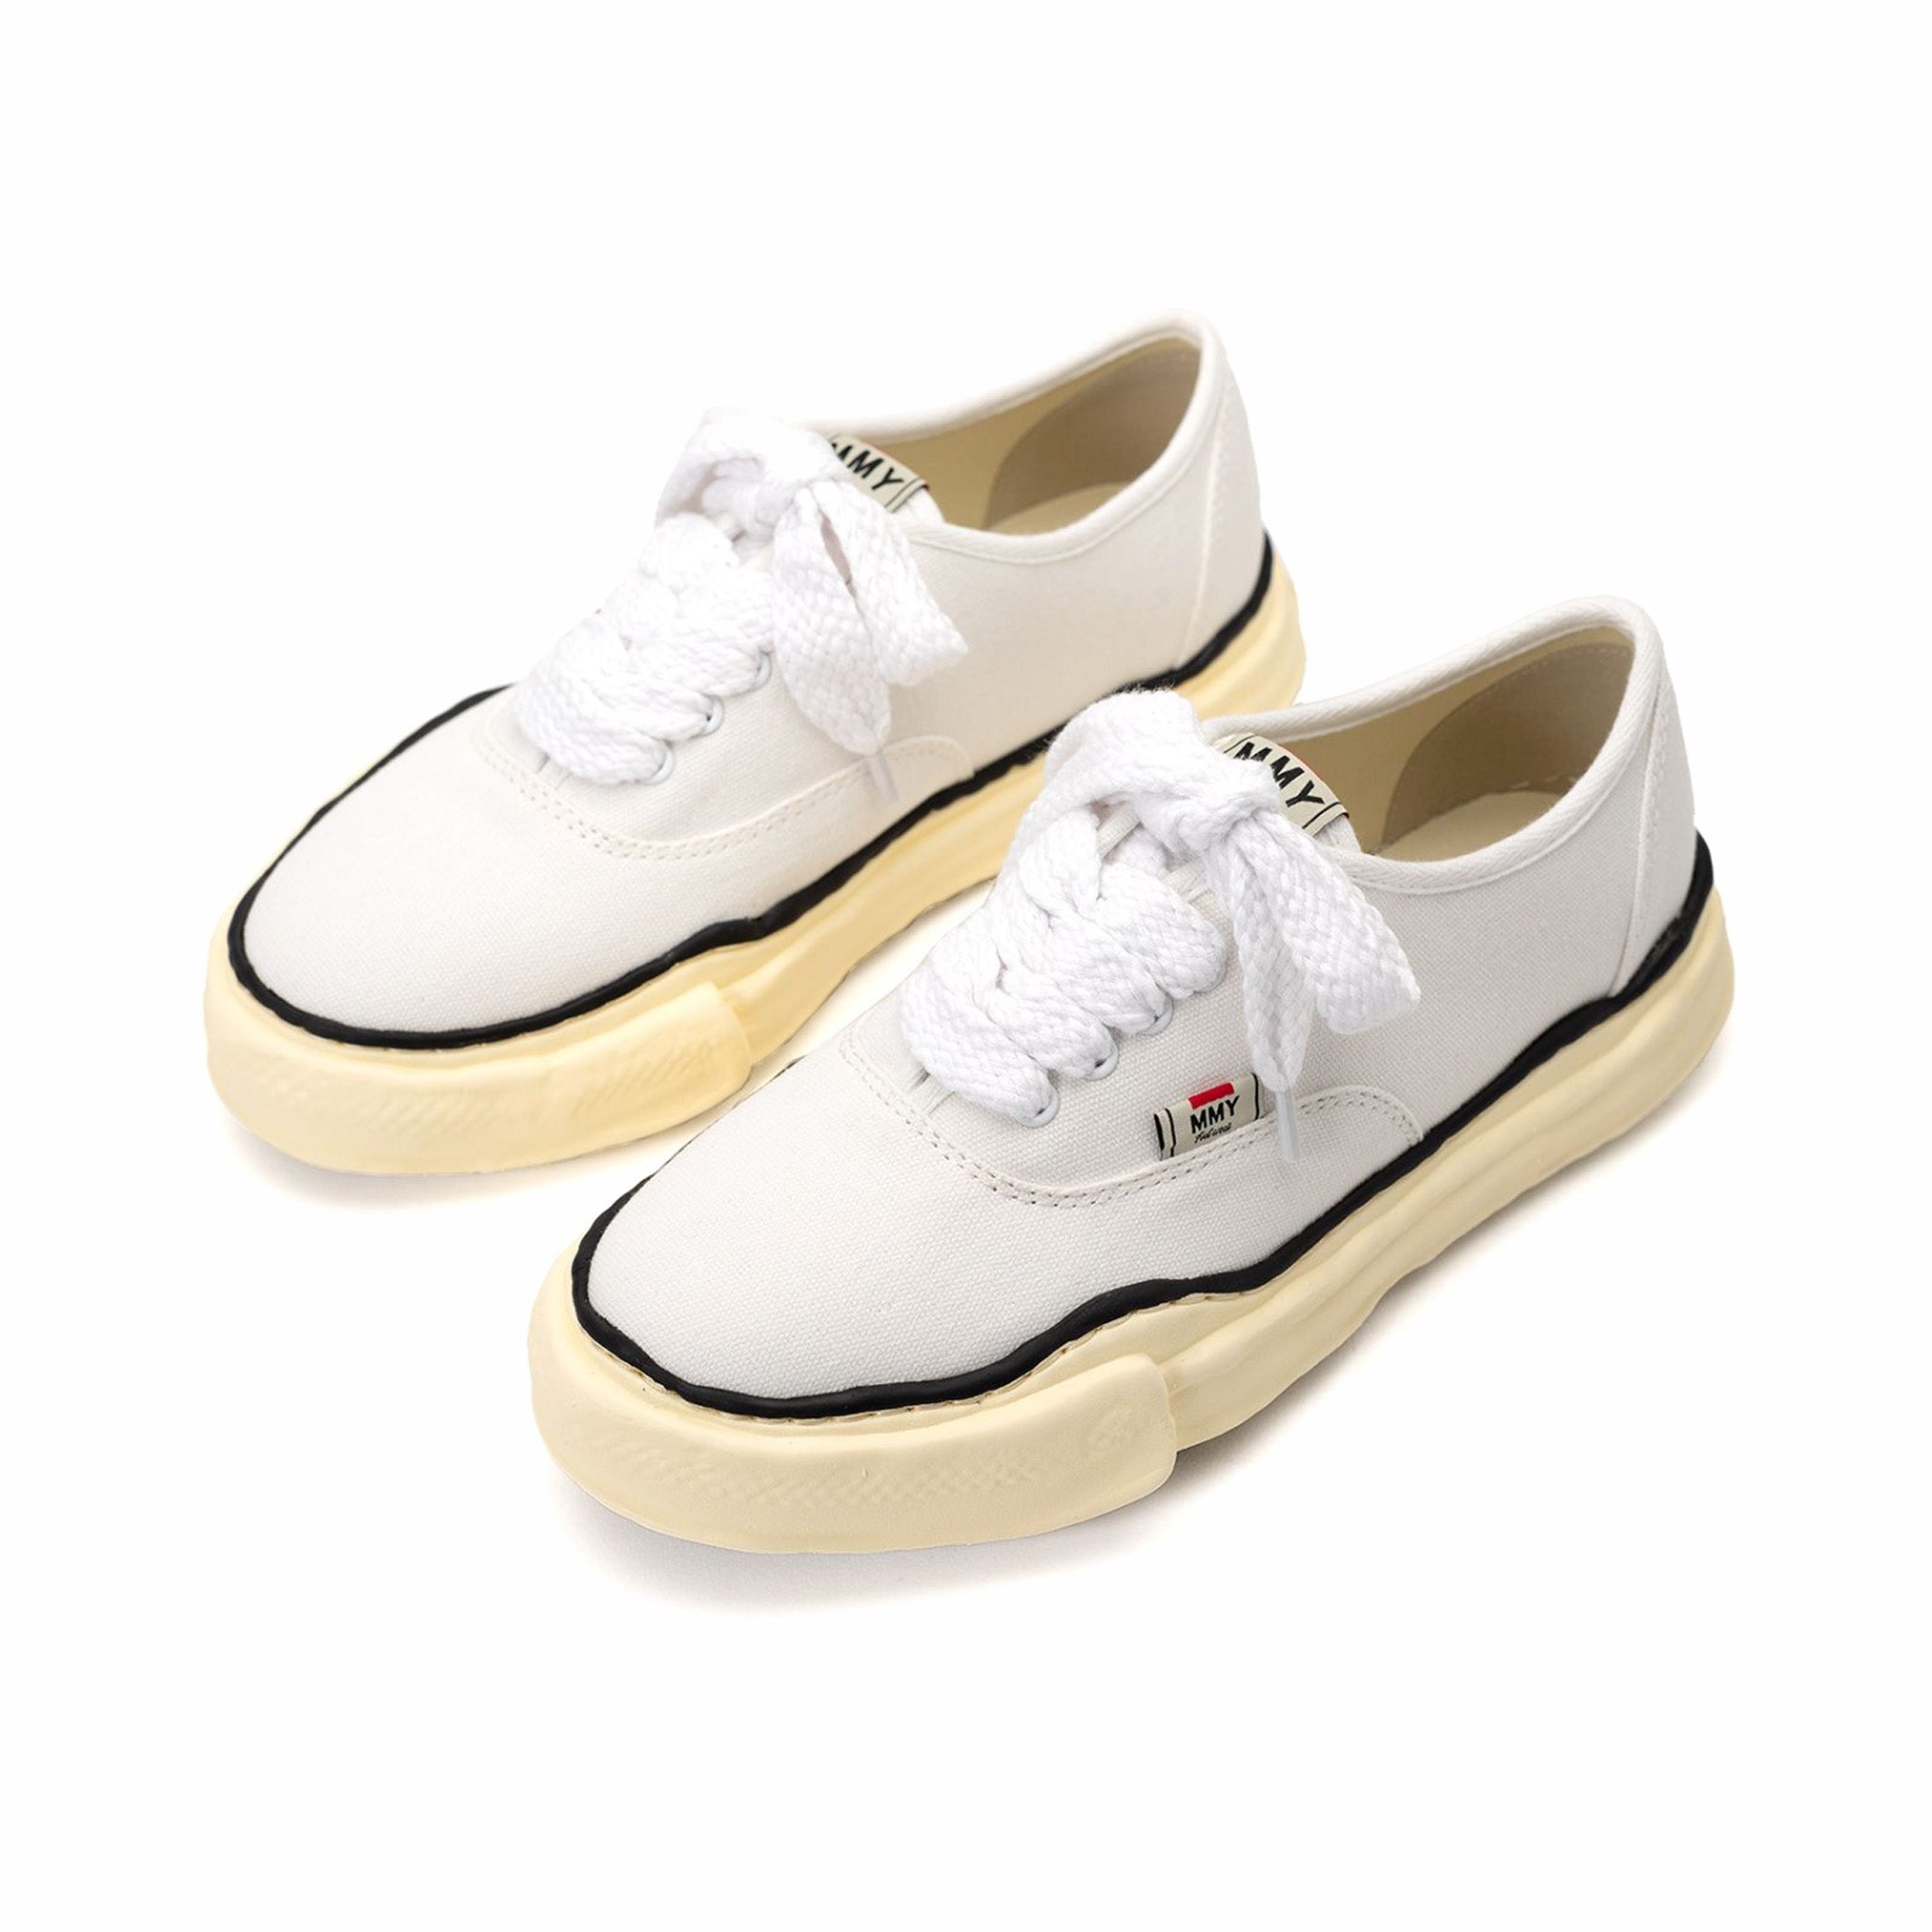 Maison MIHARA YASUHIRO &quot;BAKER&quot; Vintage-Like OG Sole Canvas Low-top Sneaker (White) - August Shop